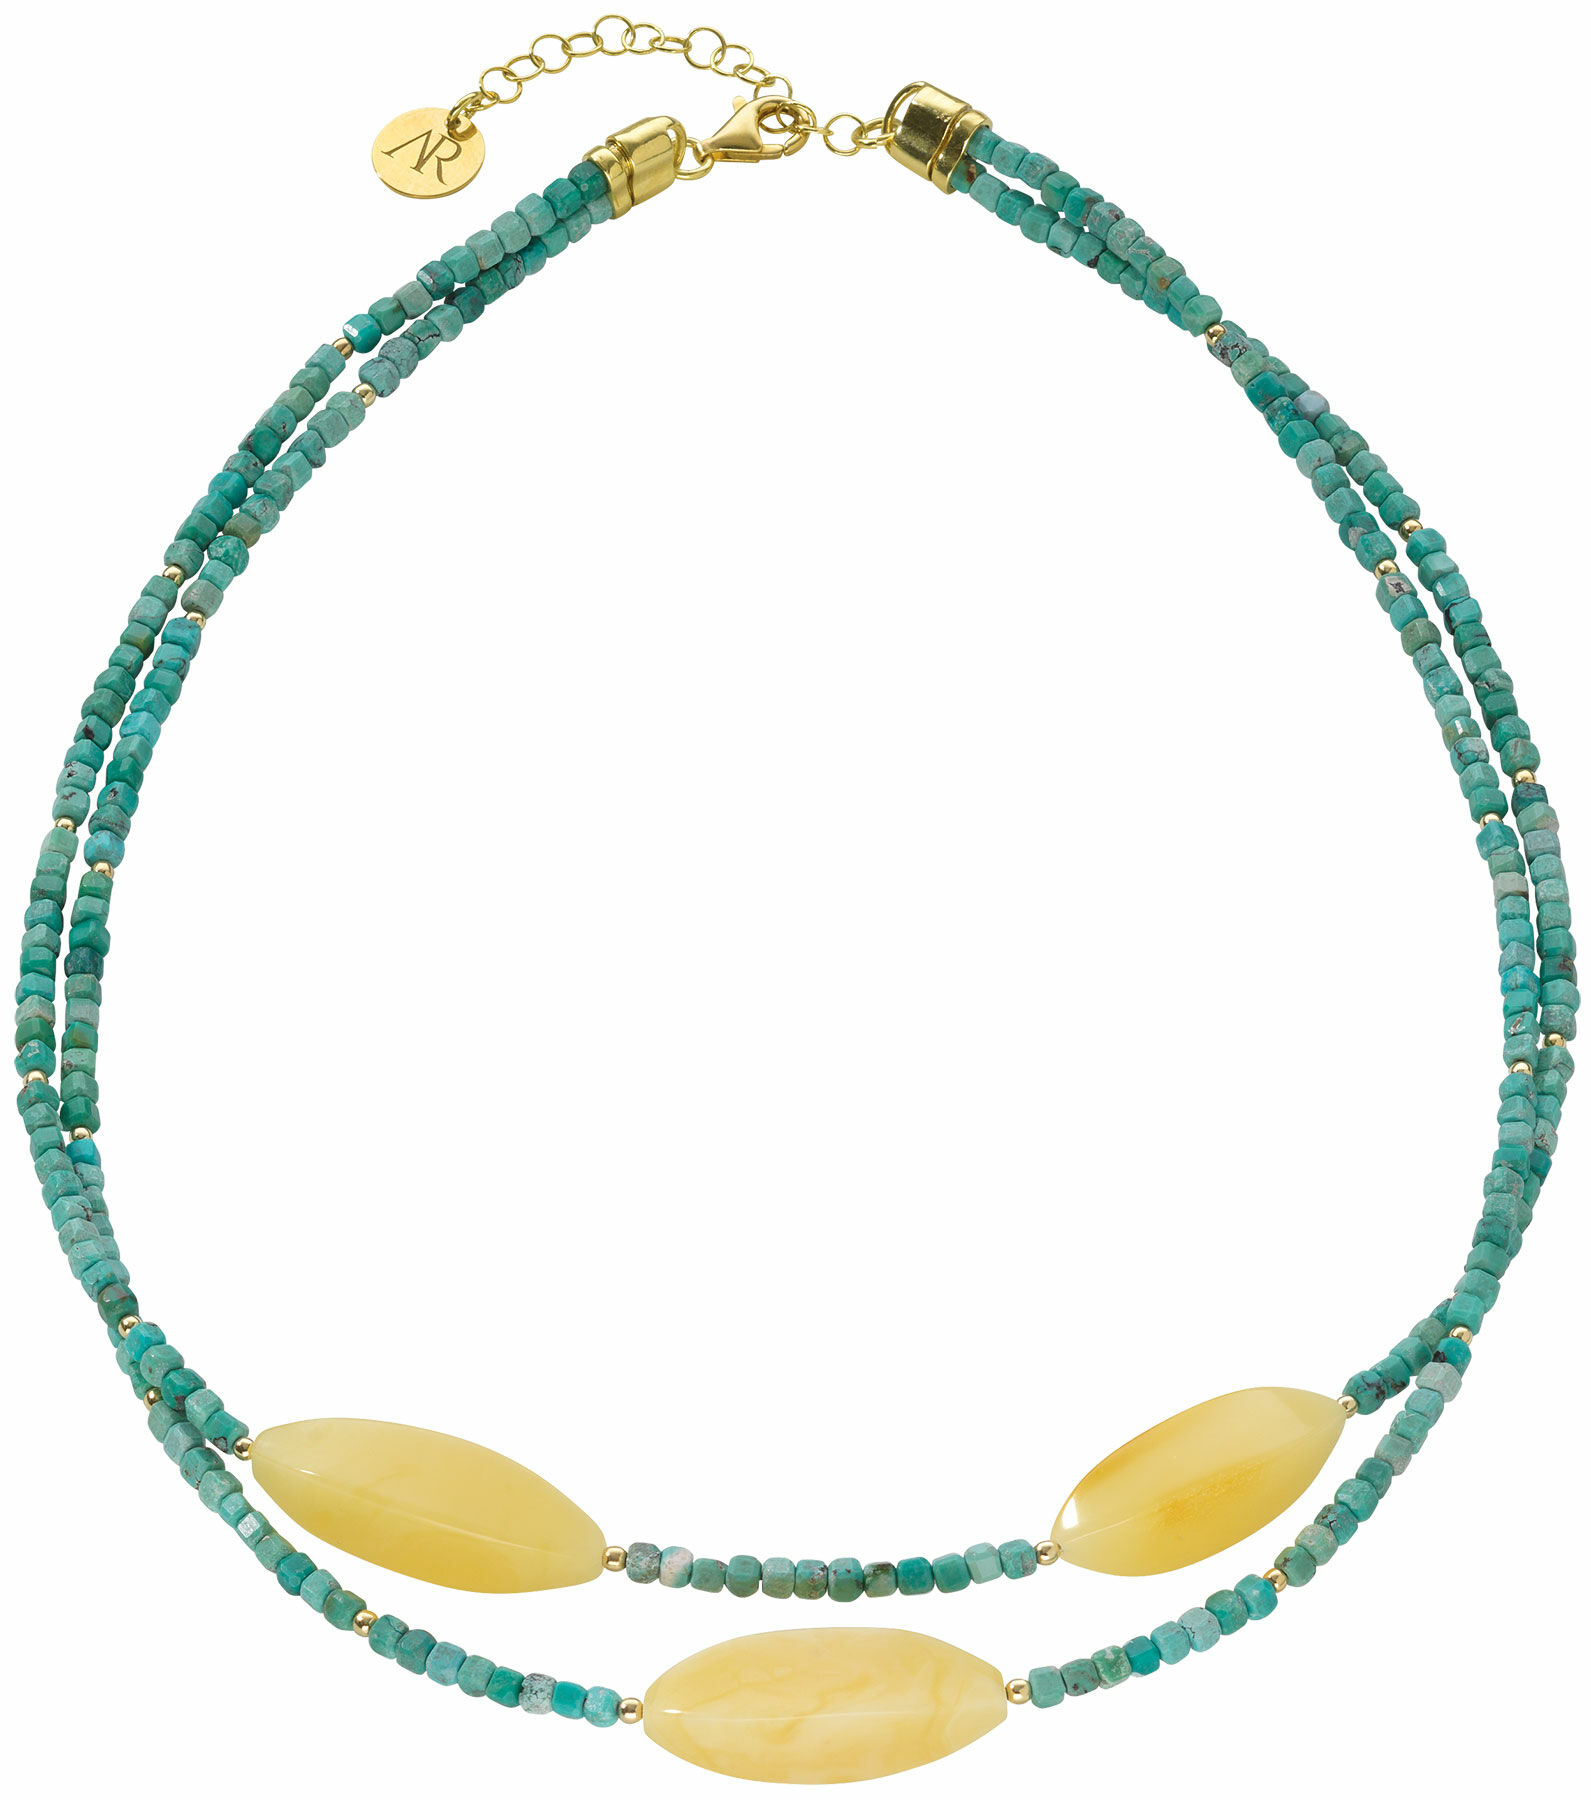 Amber necklace "Mandana"